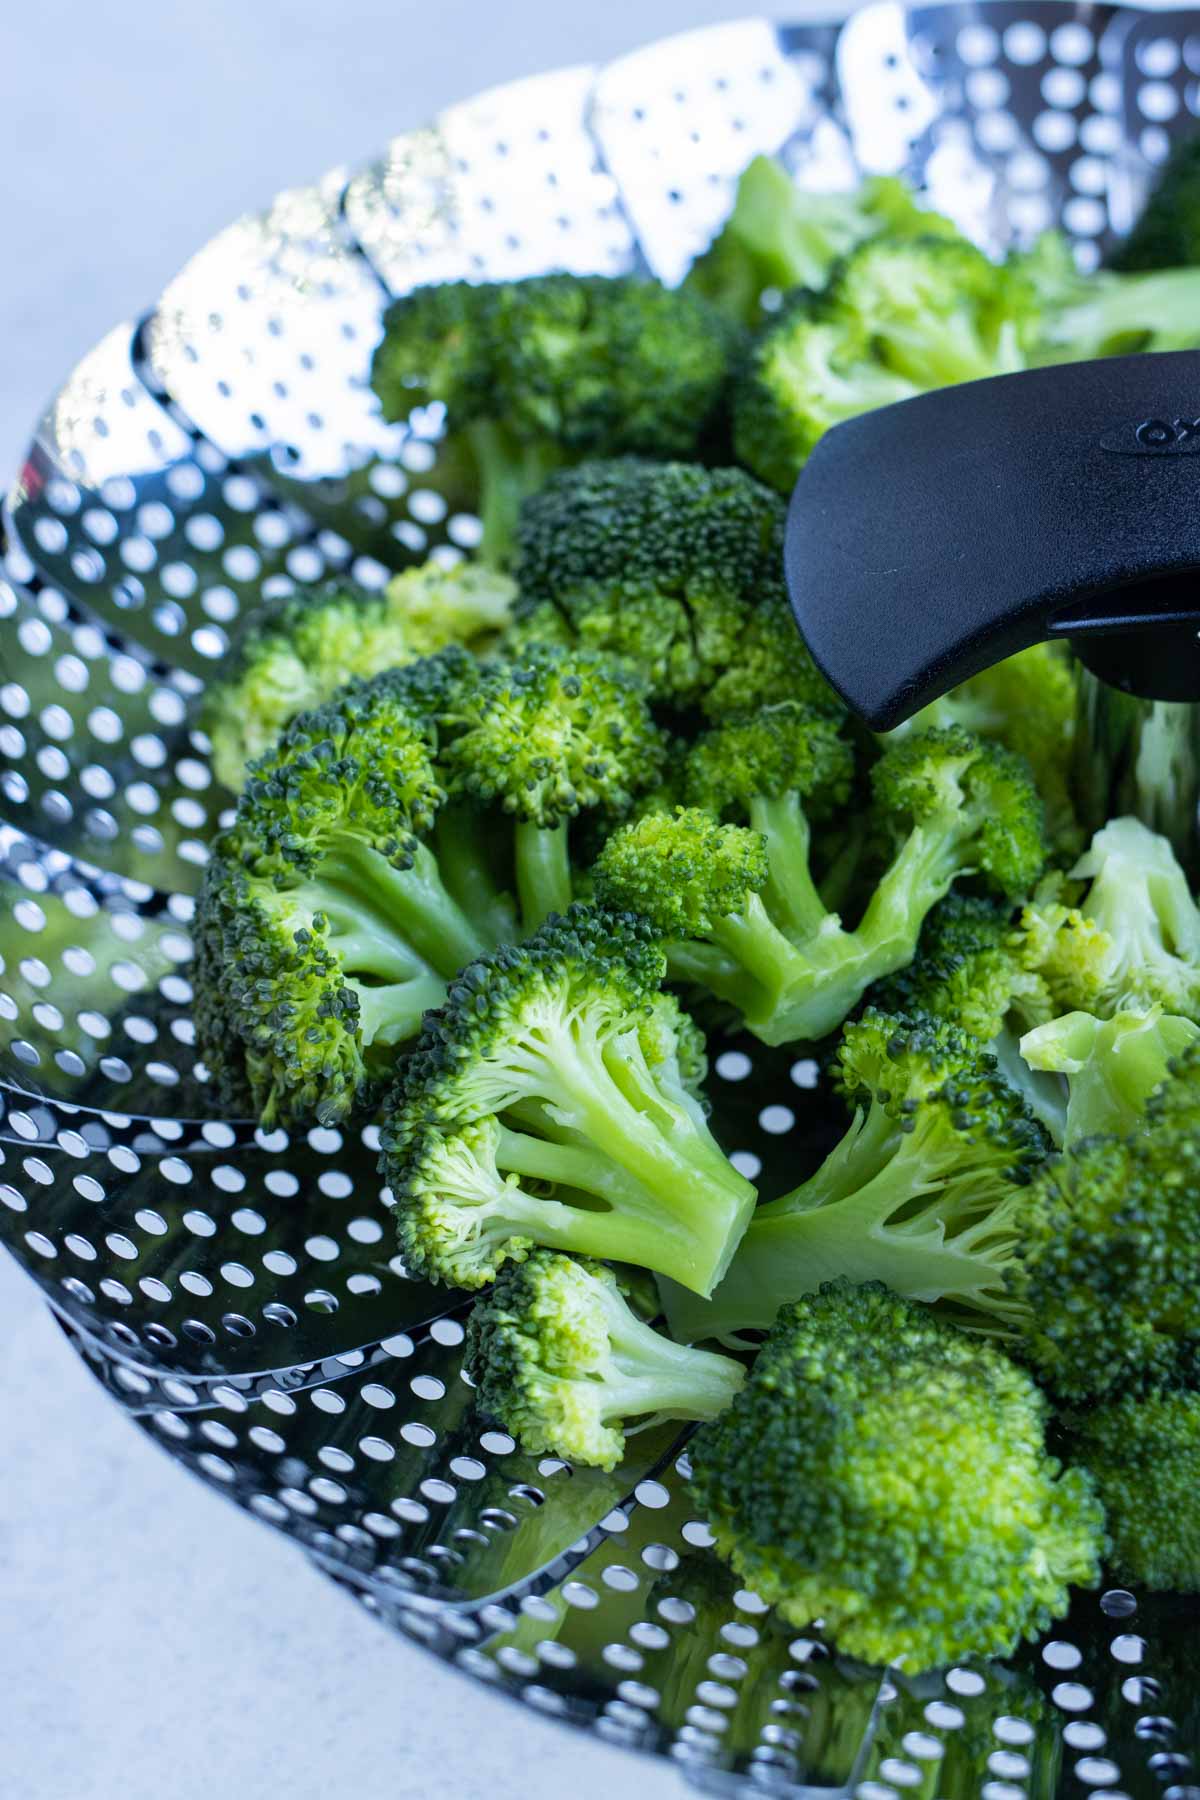 Healthy broccoli in a steamer basket is a healthy side dish.